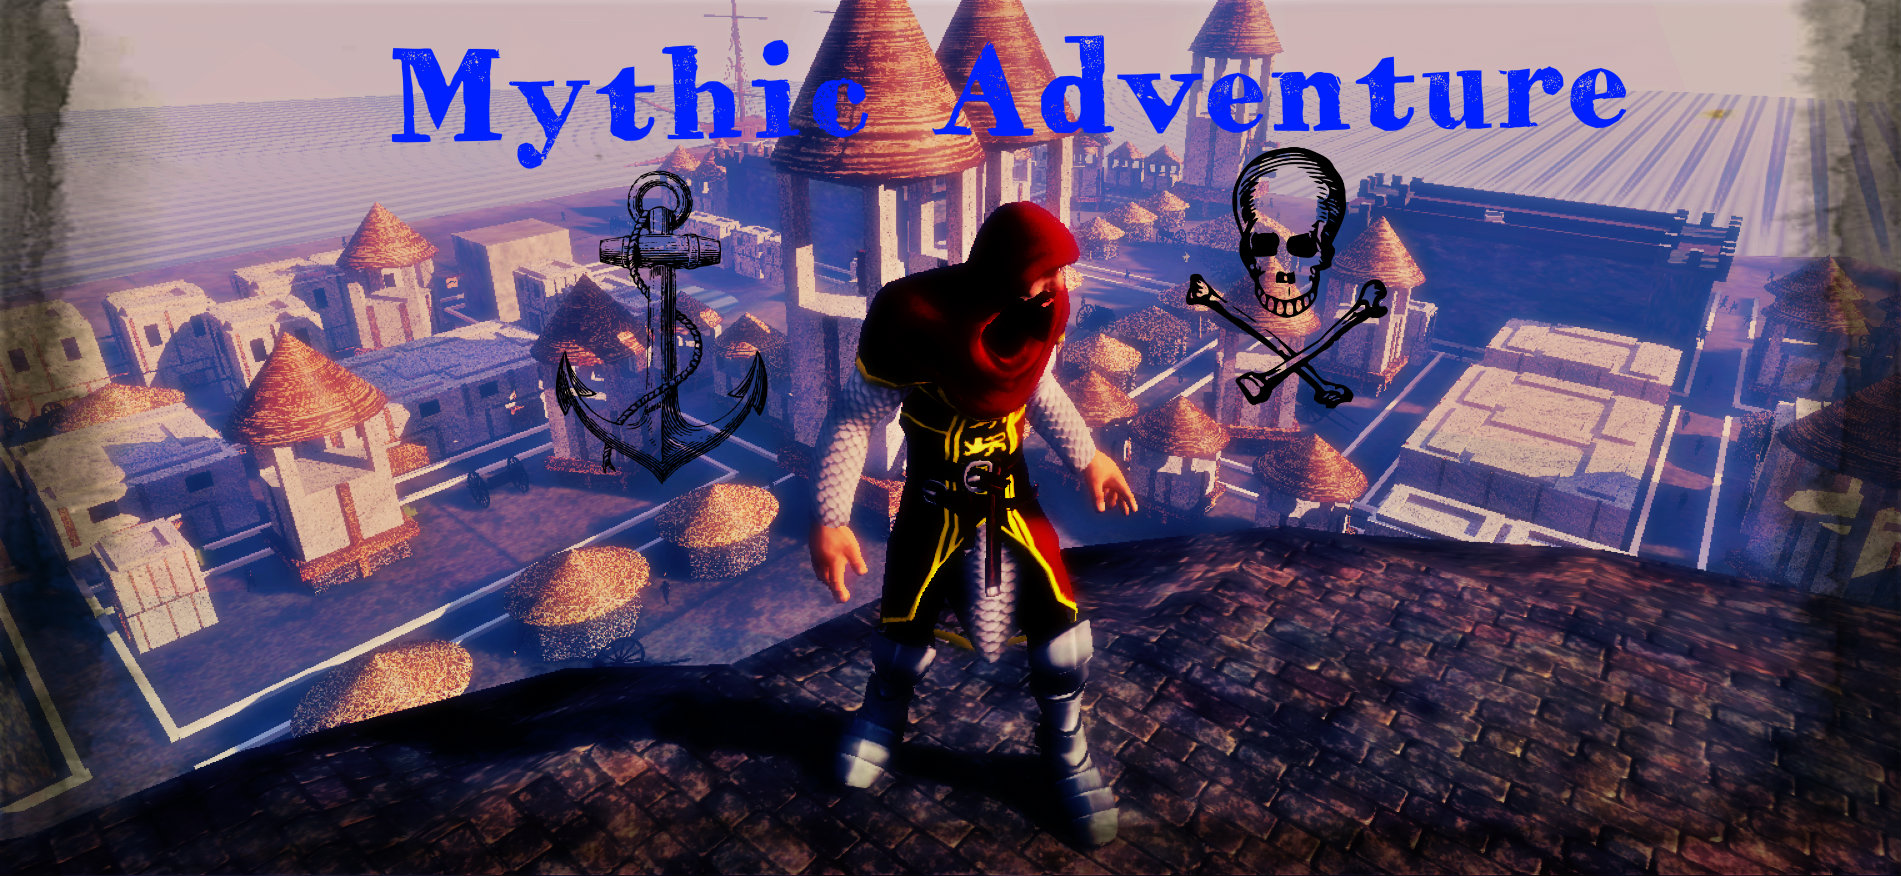 Mythic Adventure